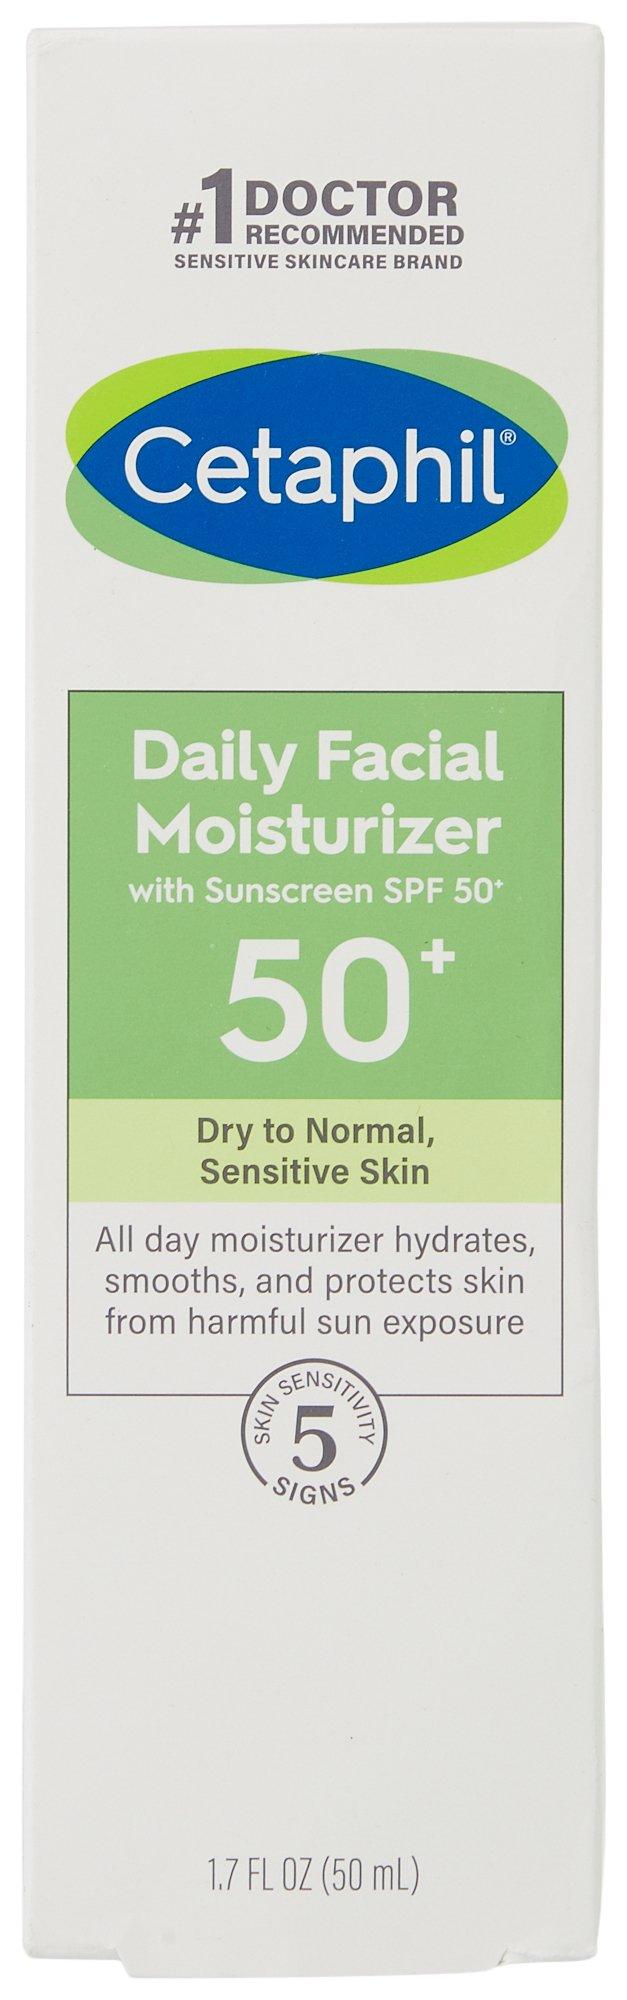 1.7 Oz. Daily Facial Moisturizer & Sunscreen